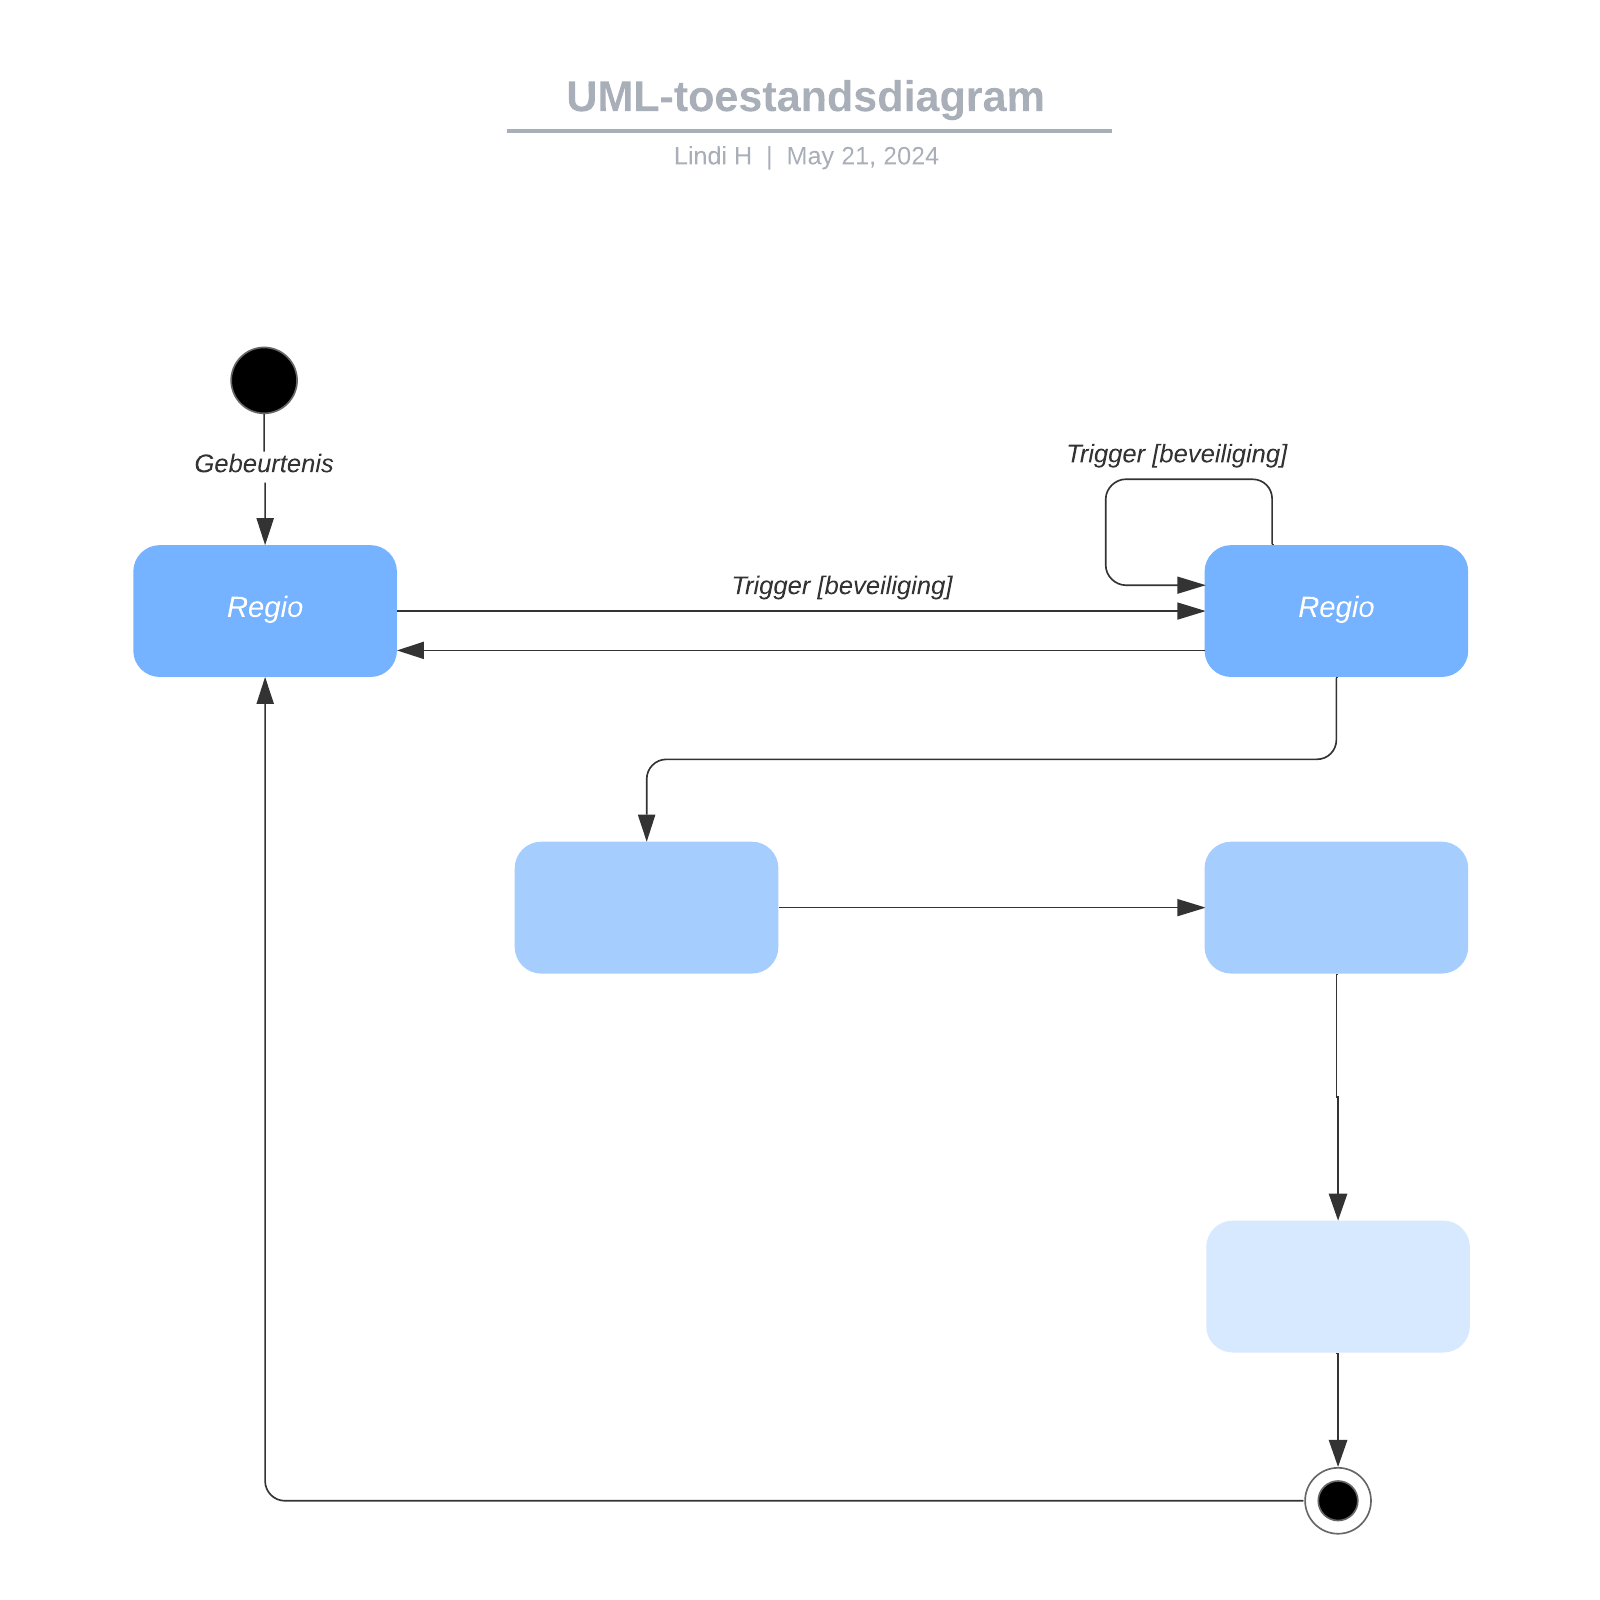 UML-toestandsdiagram example